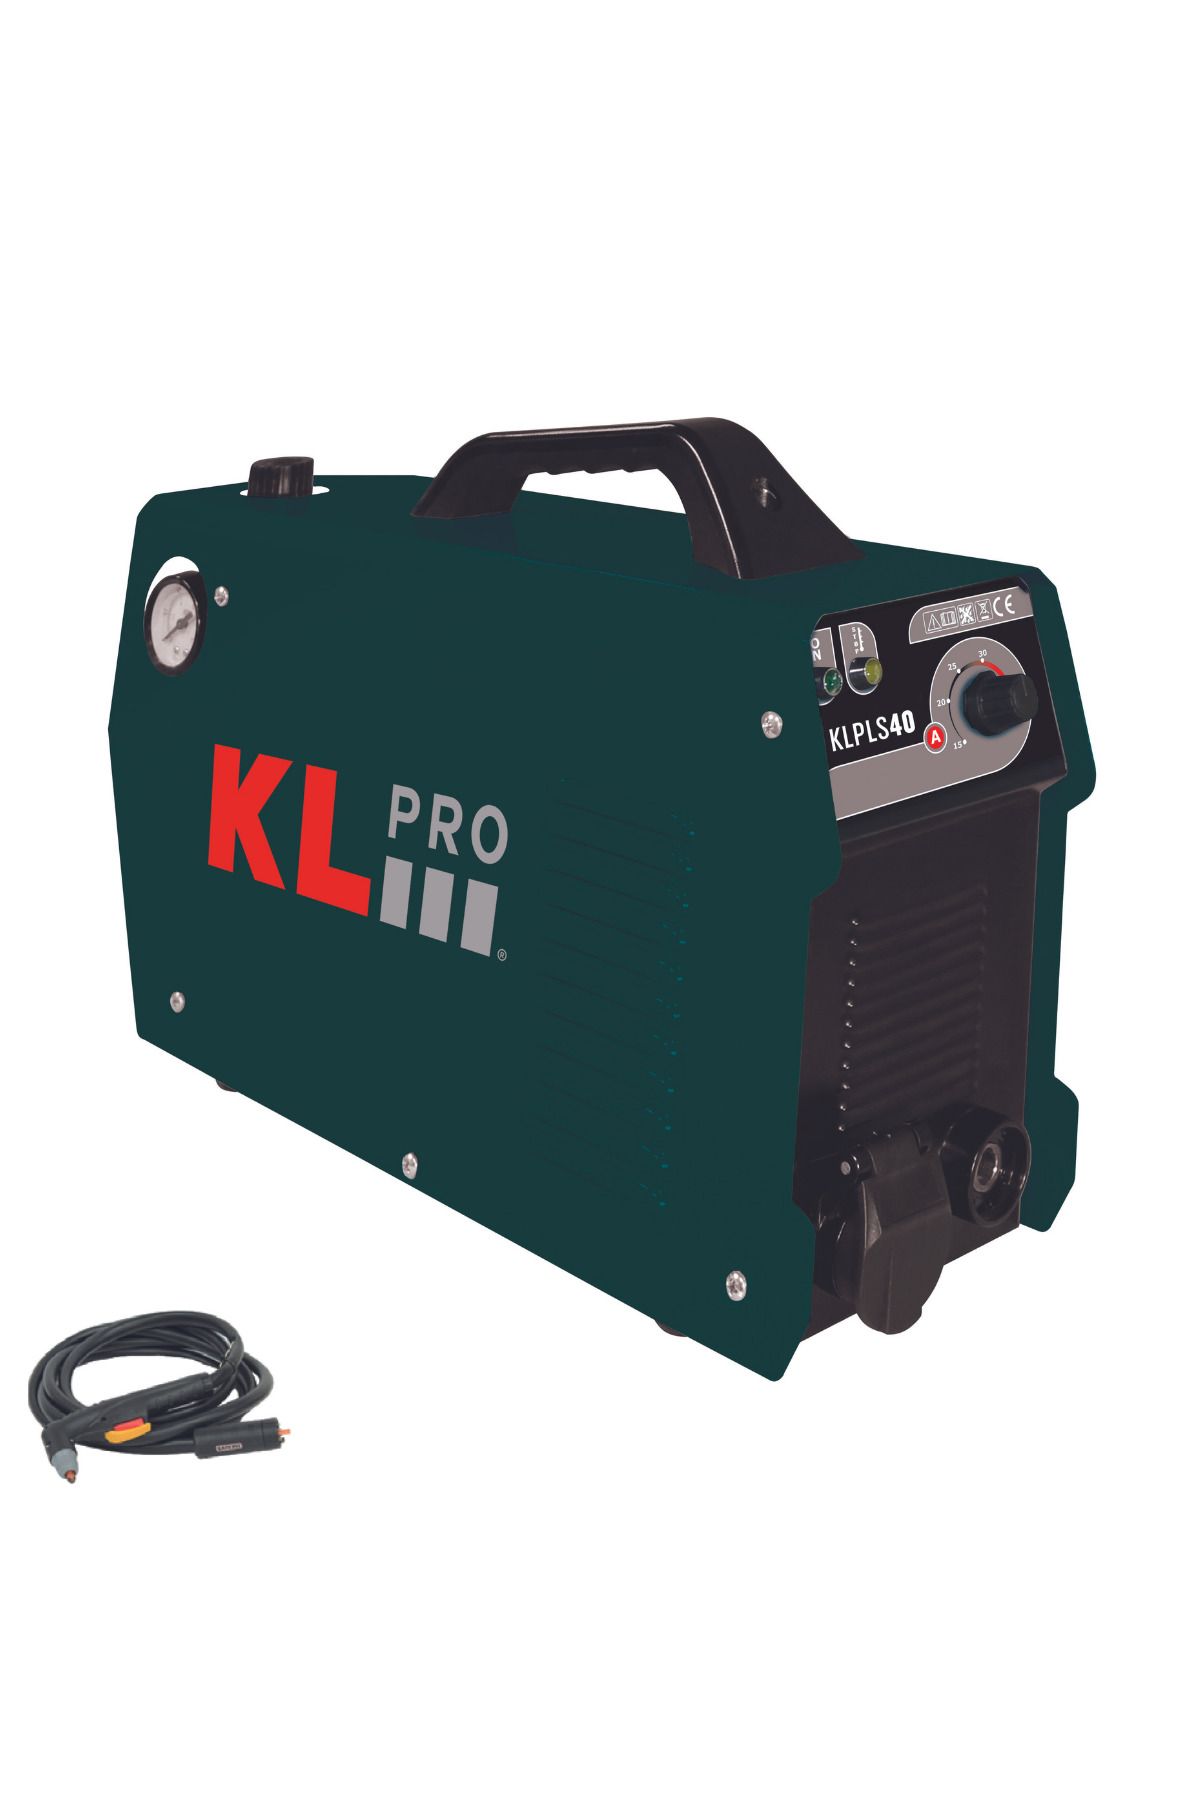 KLPRO Klpls40 10mm Inverter Plazma Kesme Makinesi